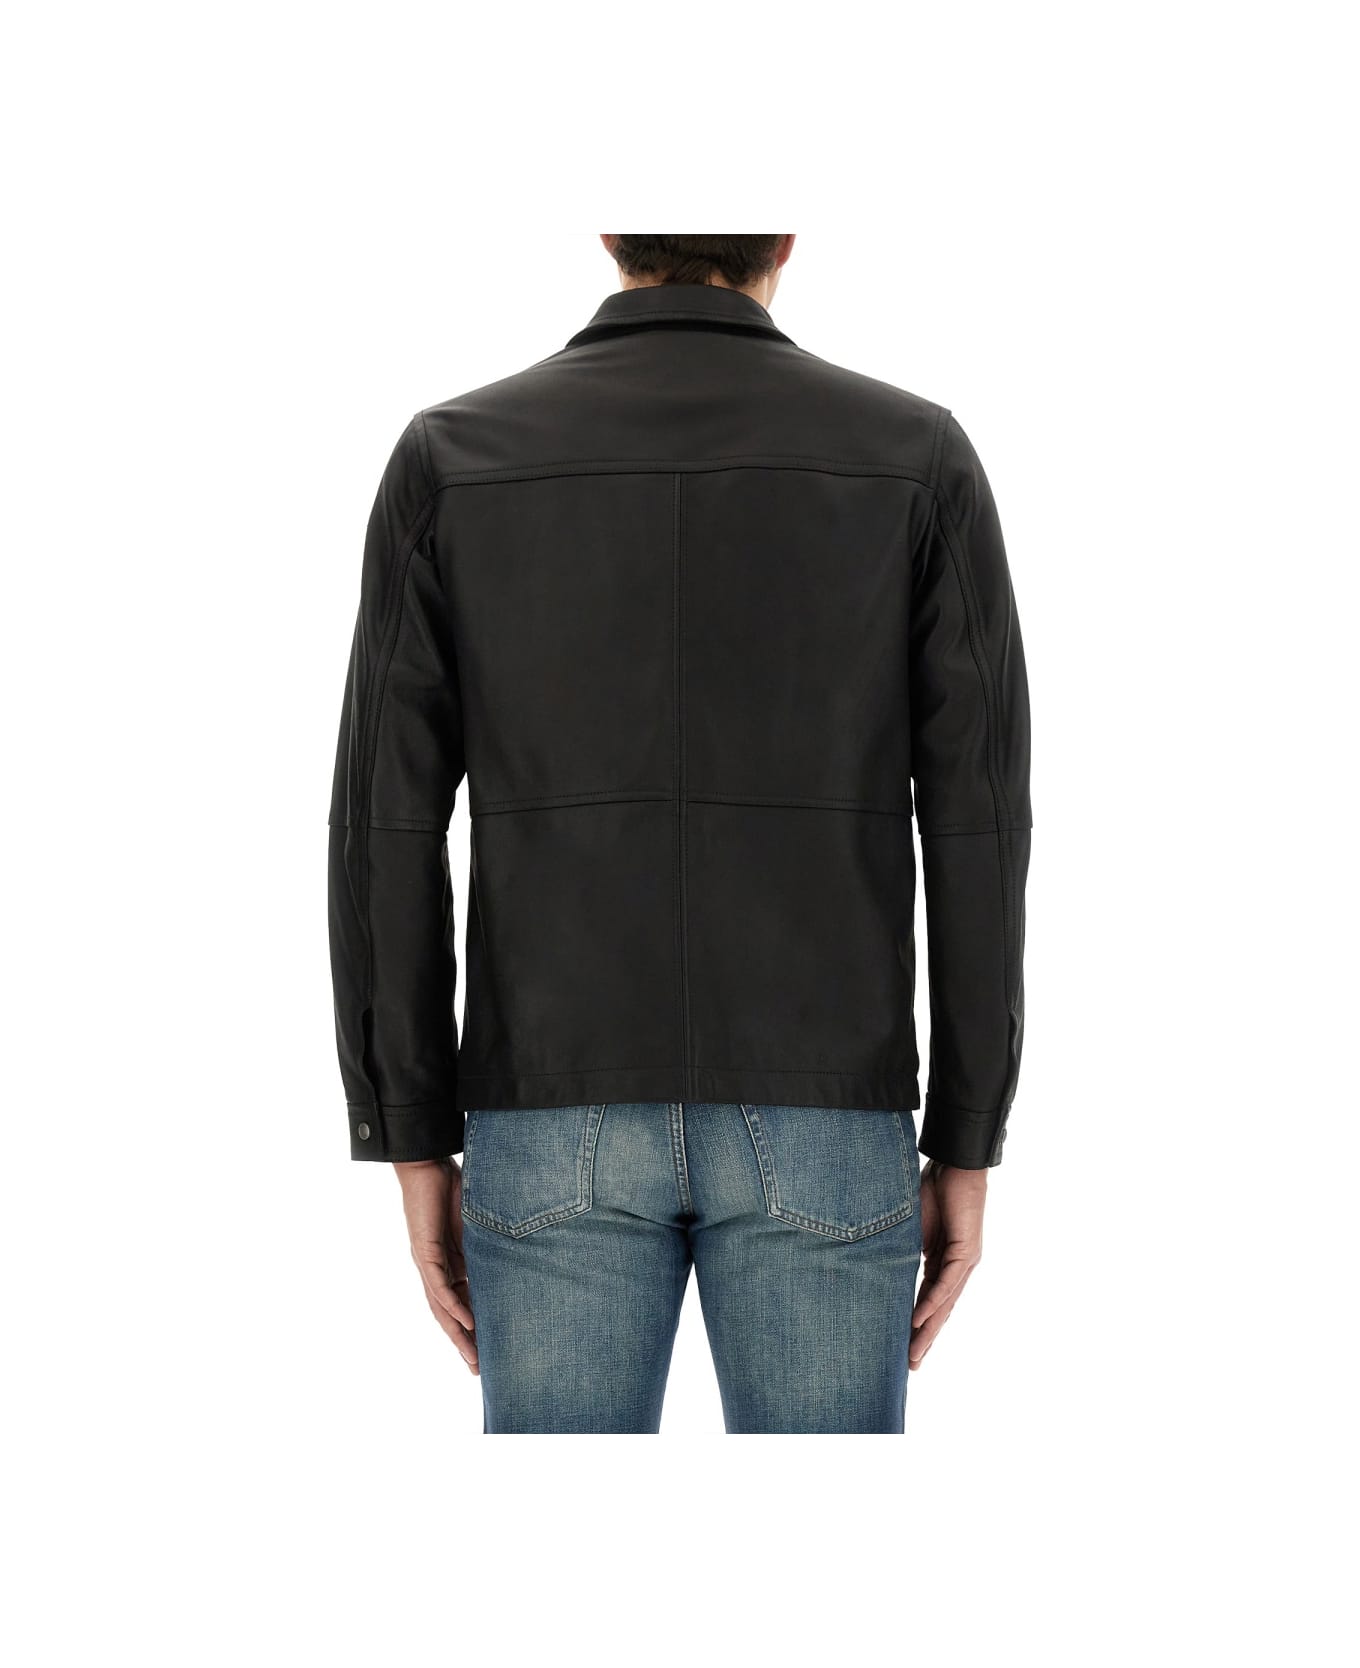 Hugo Boss Jacket With Collar - BLACK